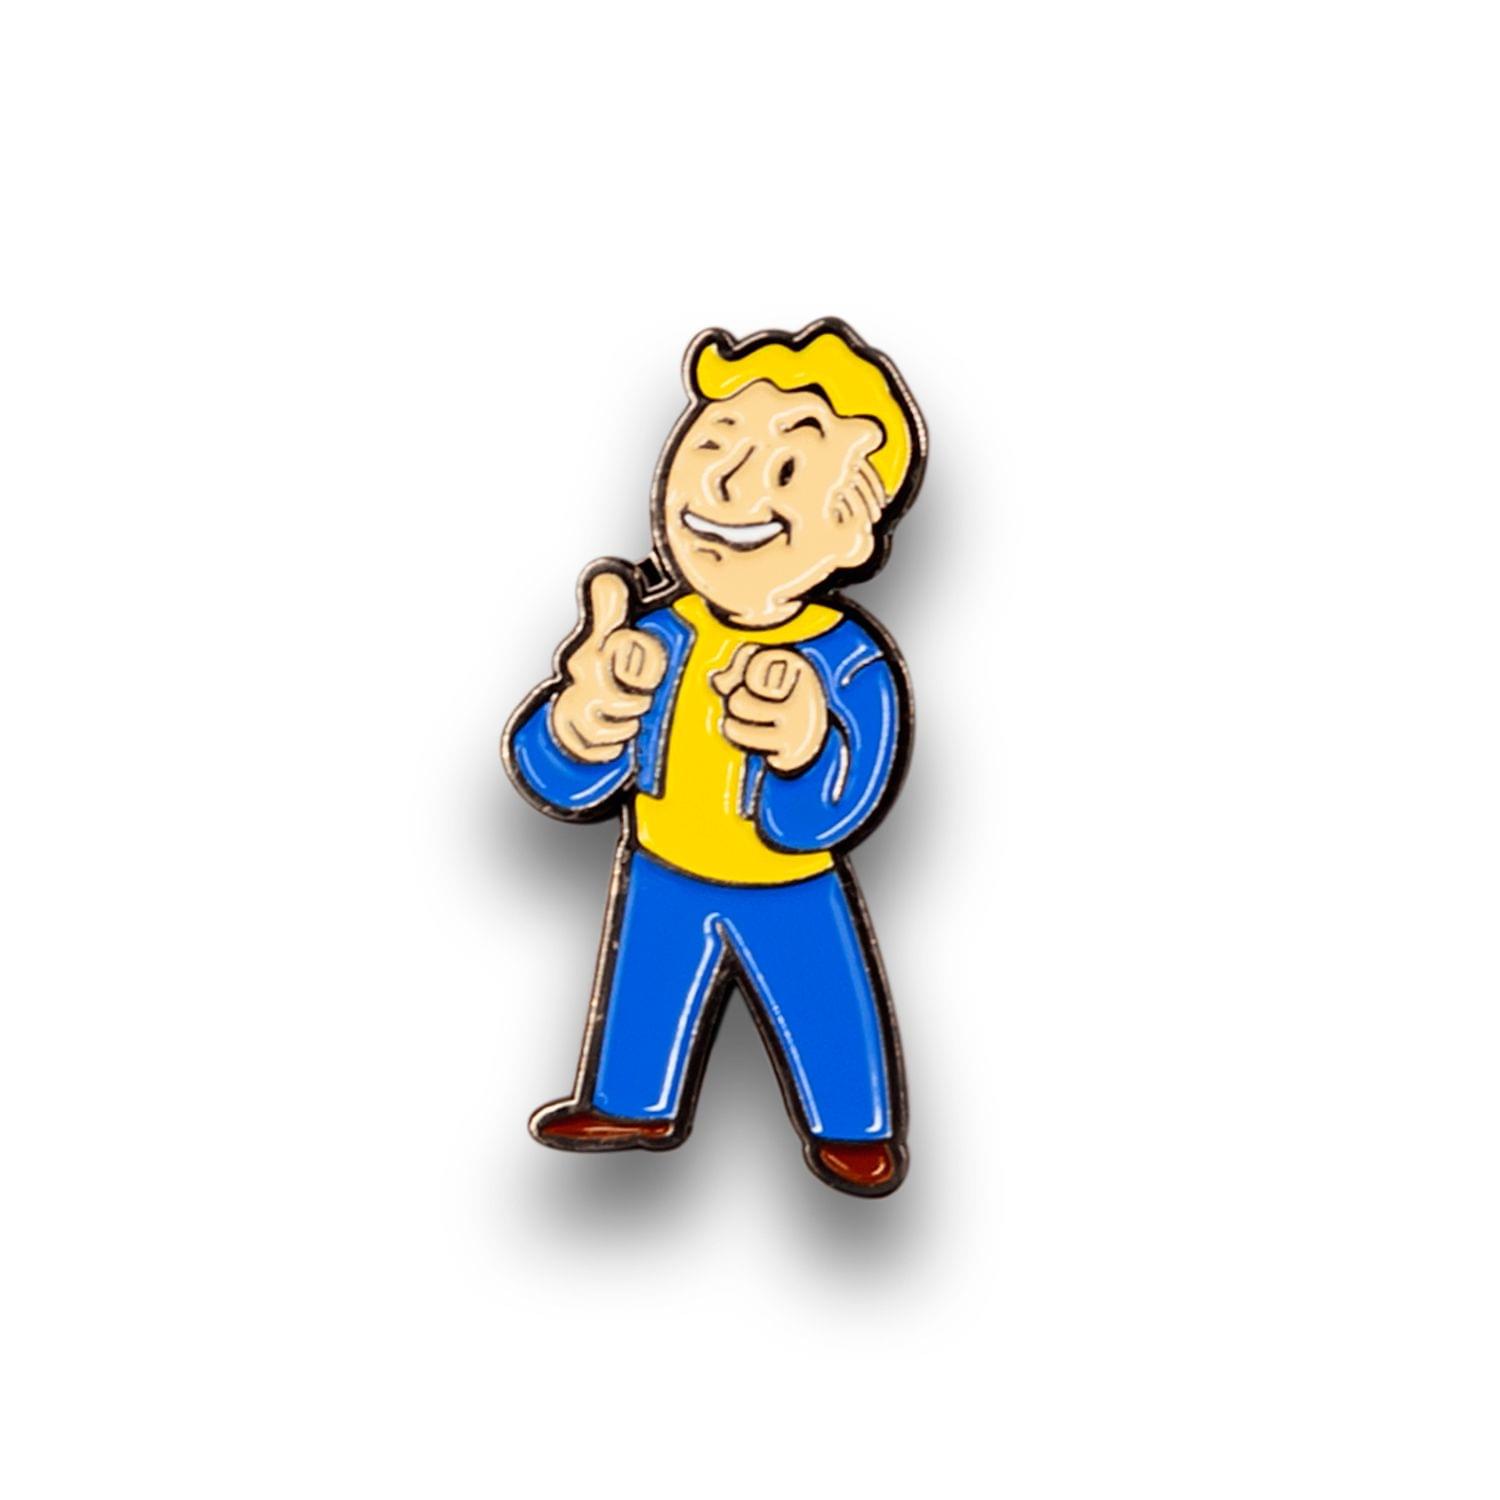 Fallout Charisma Perk Pin | Official Fallout Video Game Series Small Enamel Pin